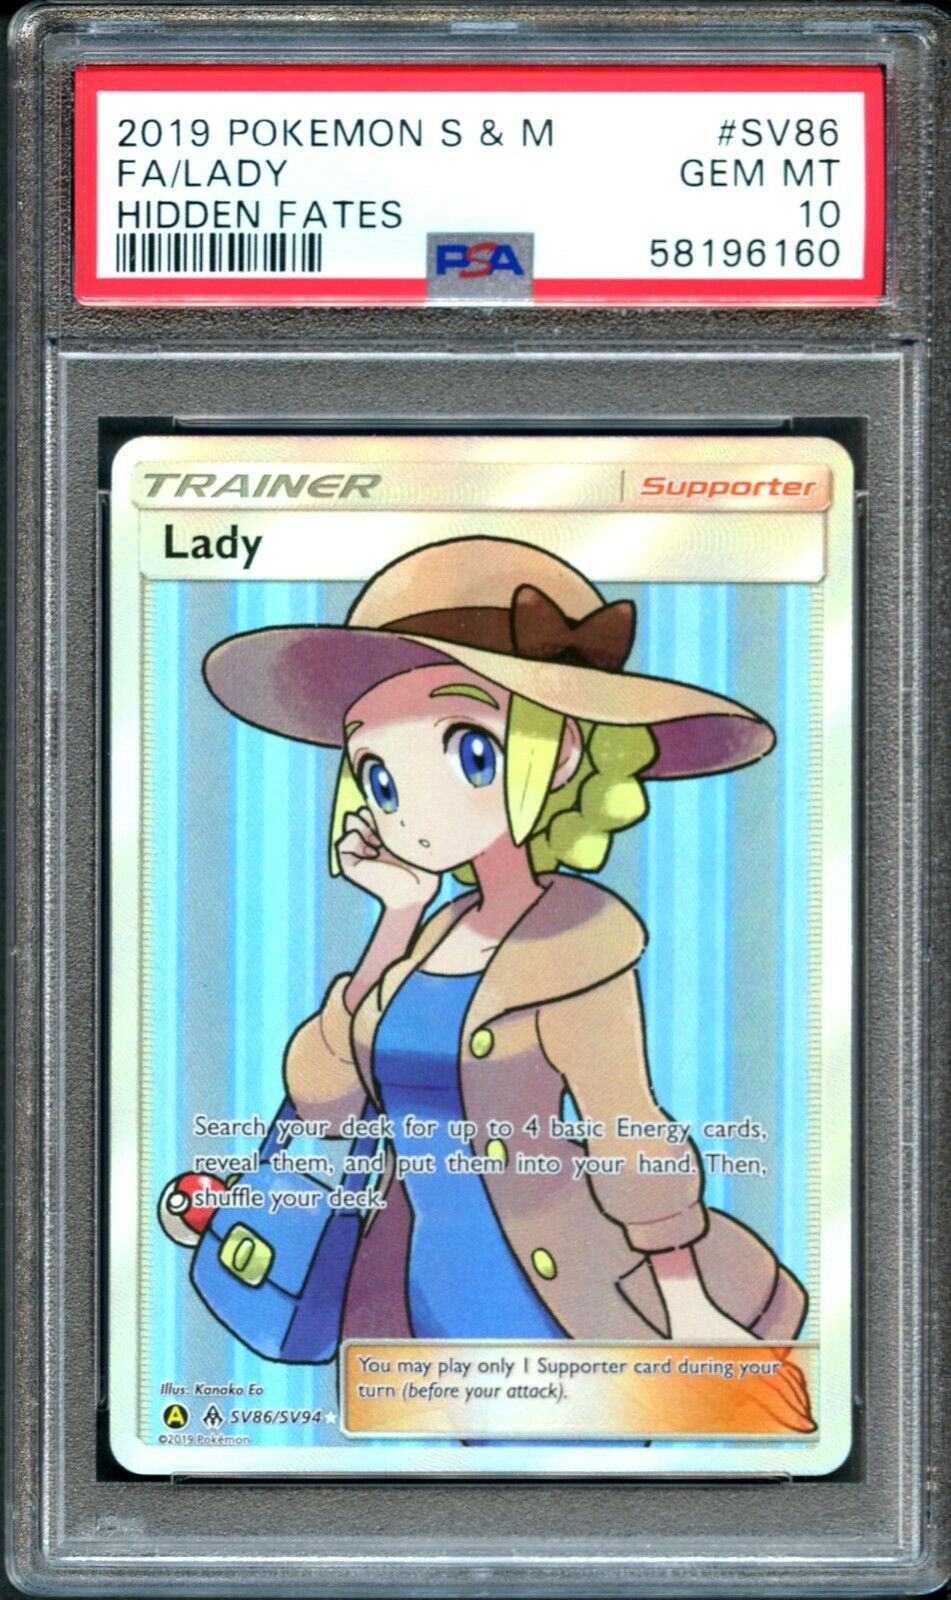 Lady Fullart PSA 10 | Hidden Fates SV86/SV94 | Pokemon Card EN Gem Mint